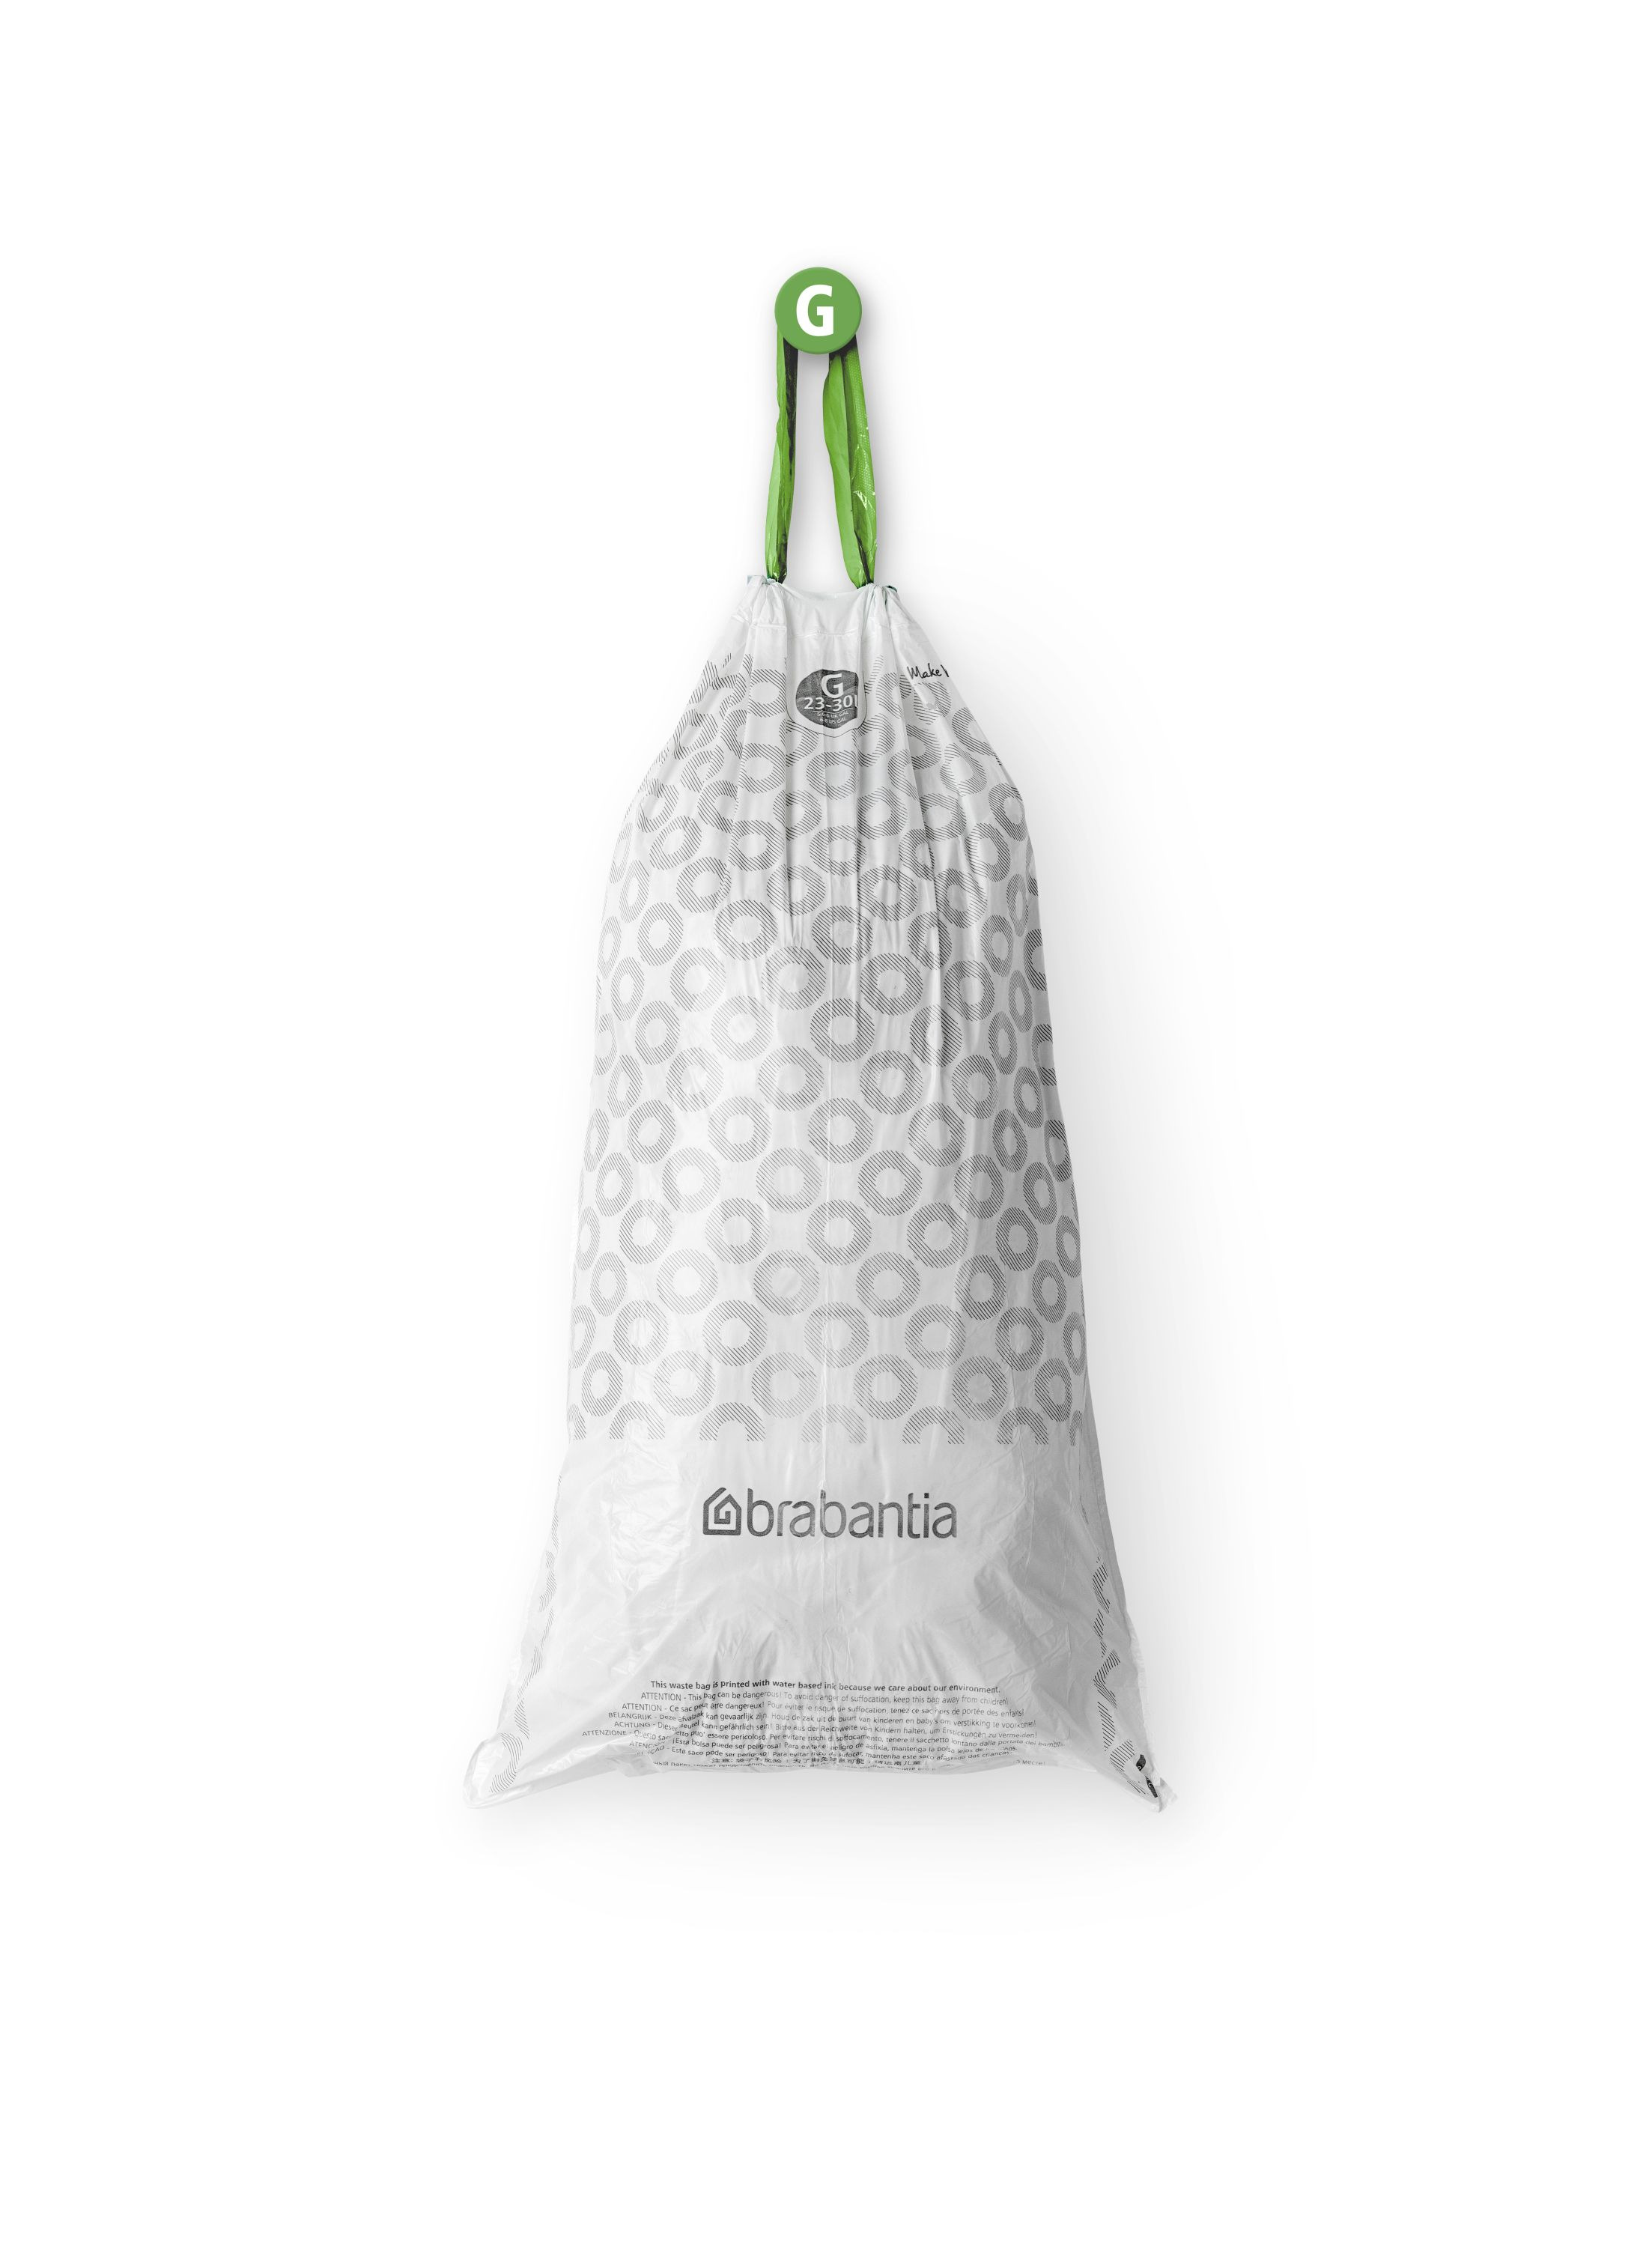 Brabantia Bin Liner G, 23-30 L - 20 Bags